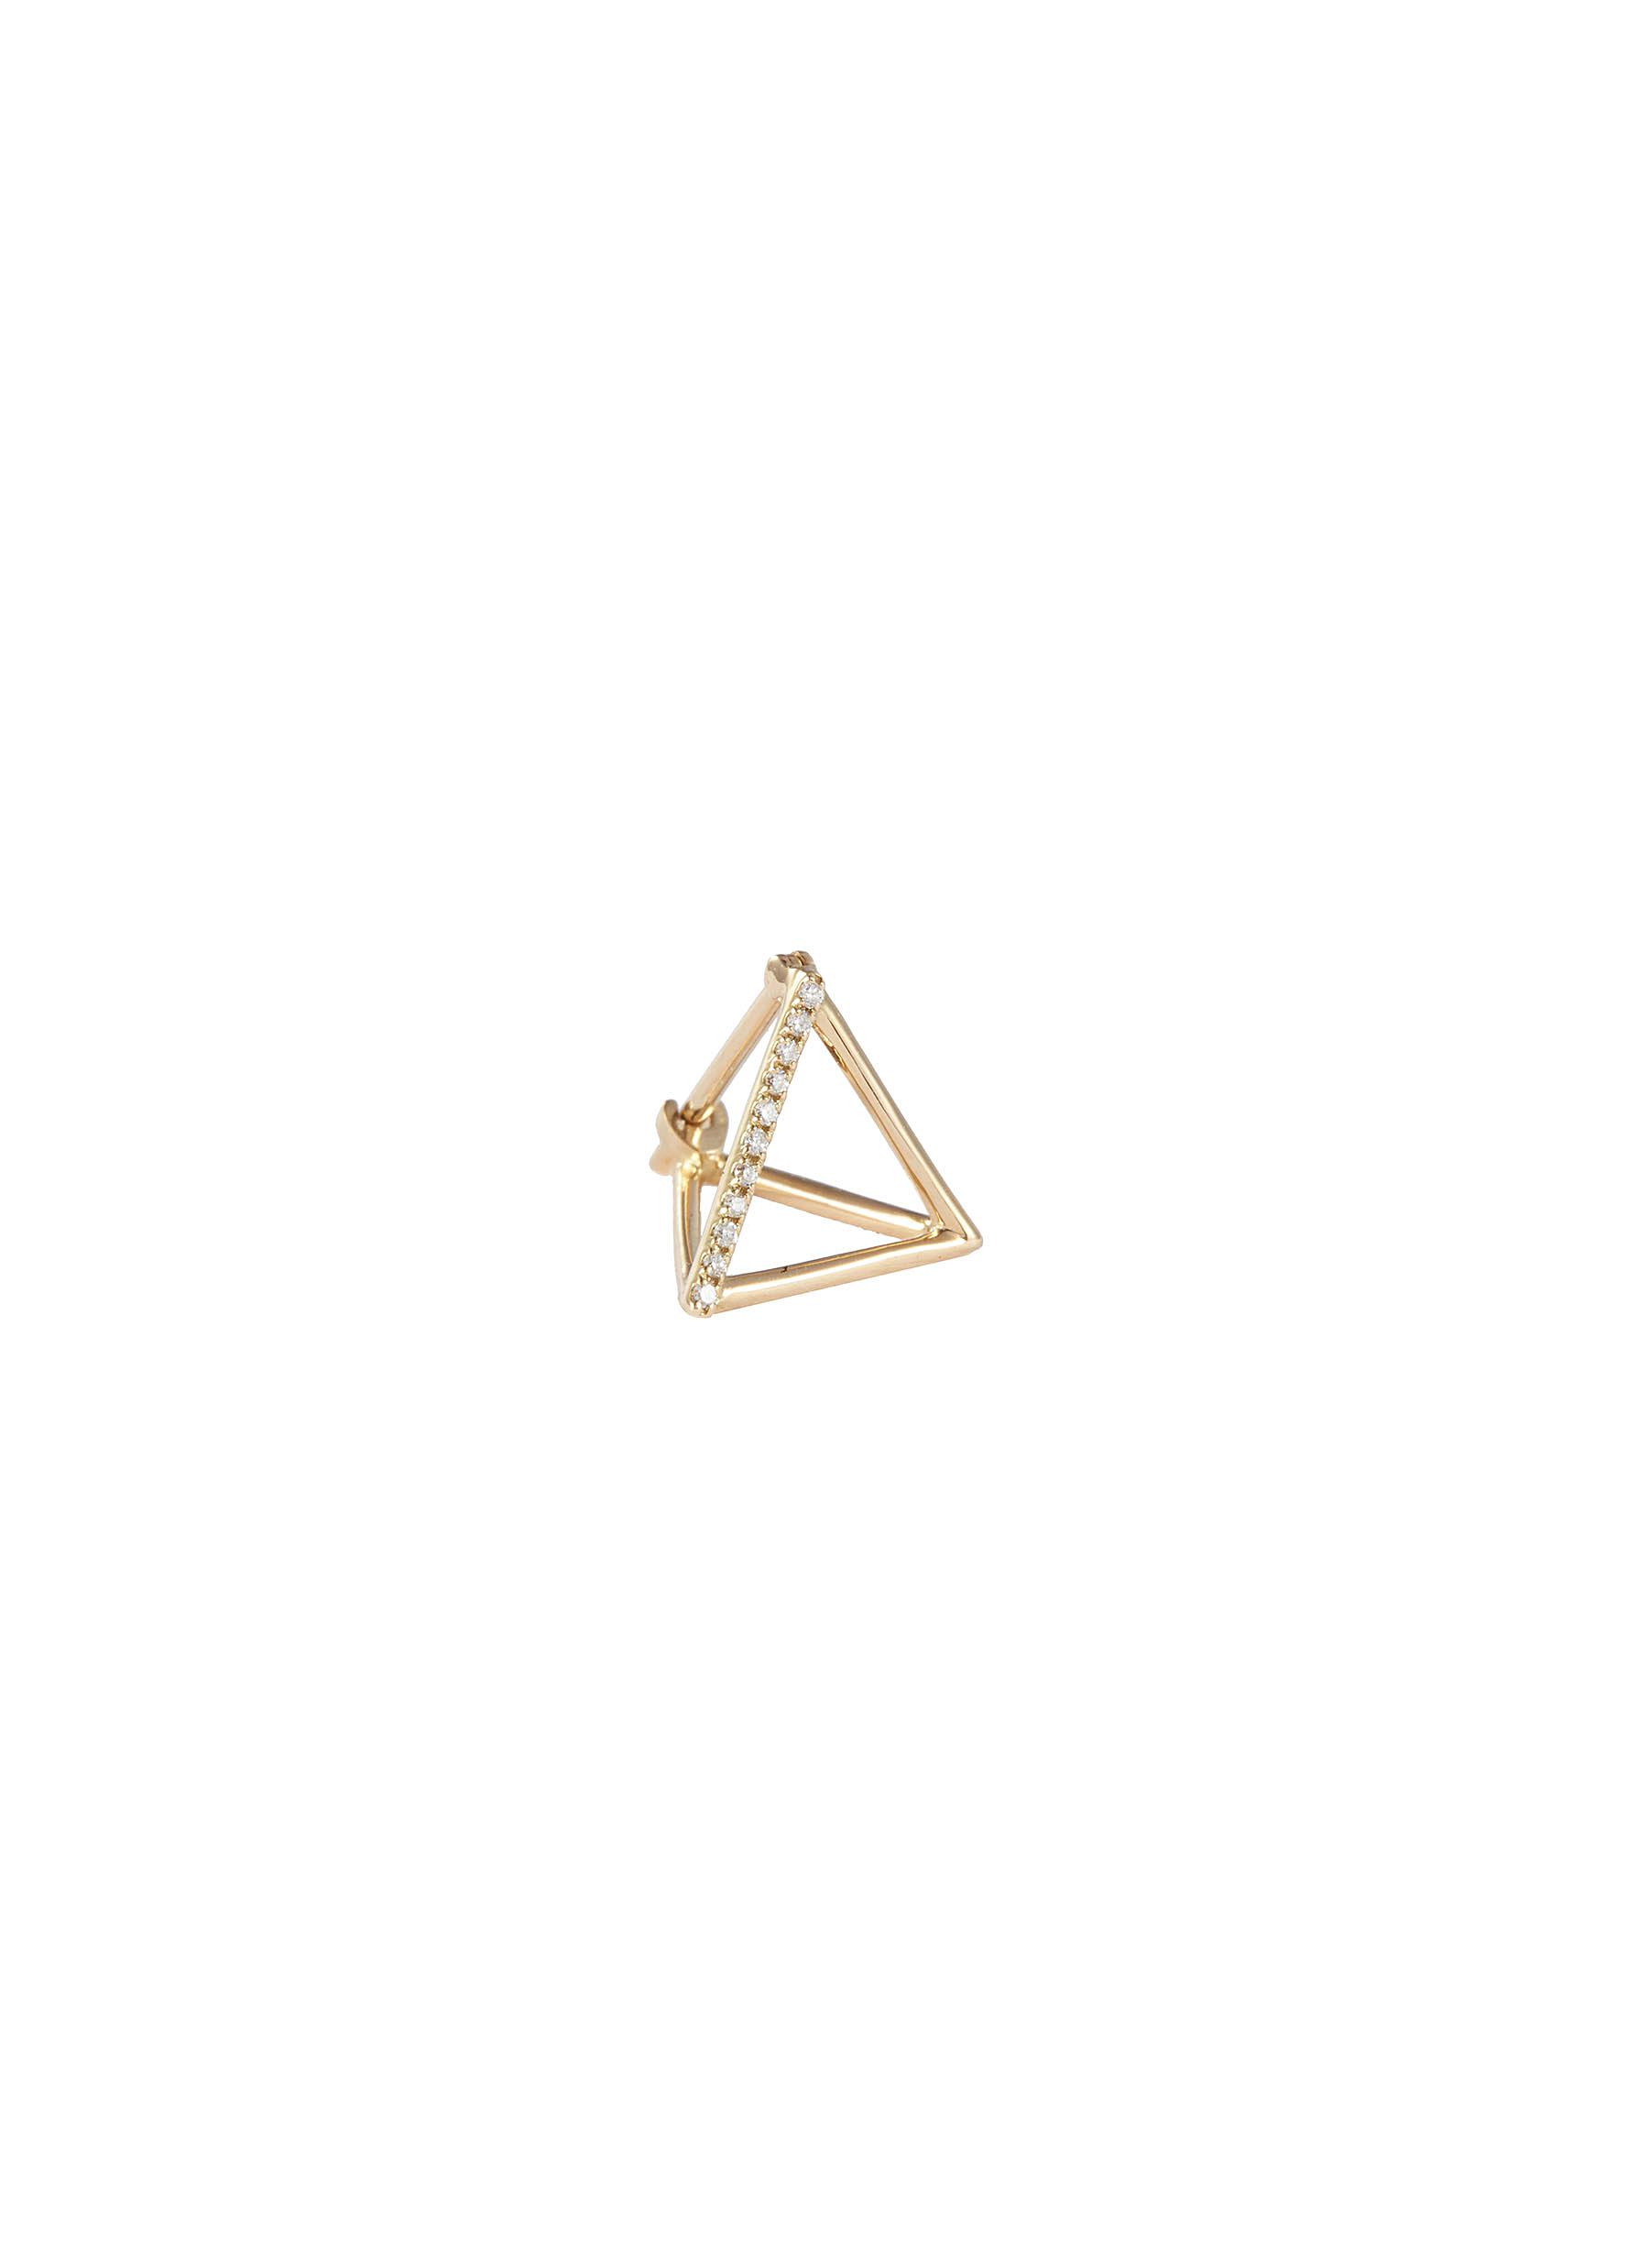 'Triangle' diamond 18k yellow gold pyramid single earring - 10mm